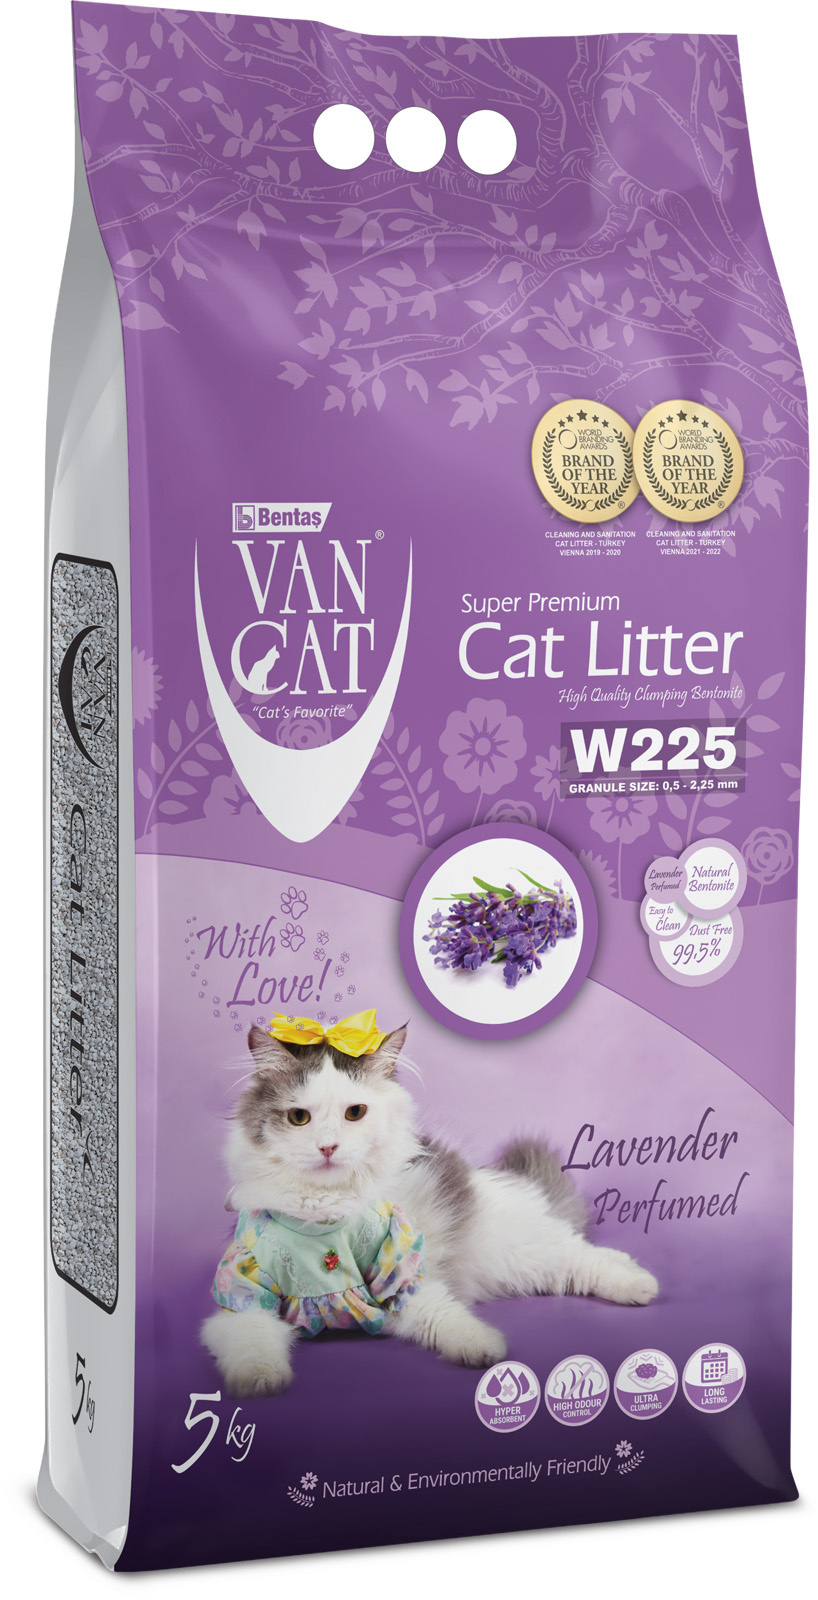 Van Cat Van Cat комкующийся наполнитель без пыли с ароматом лаванды, пакет (5 кг) van cat van cat комкующийся наполнитель без пыли с ароматом алое вера пакет 5 кг